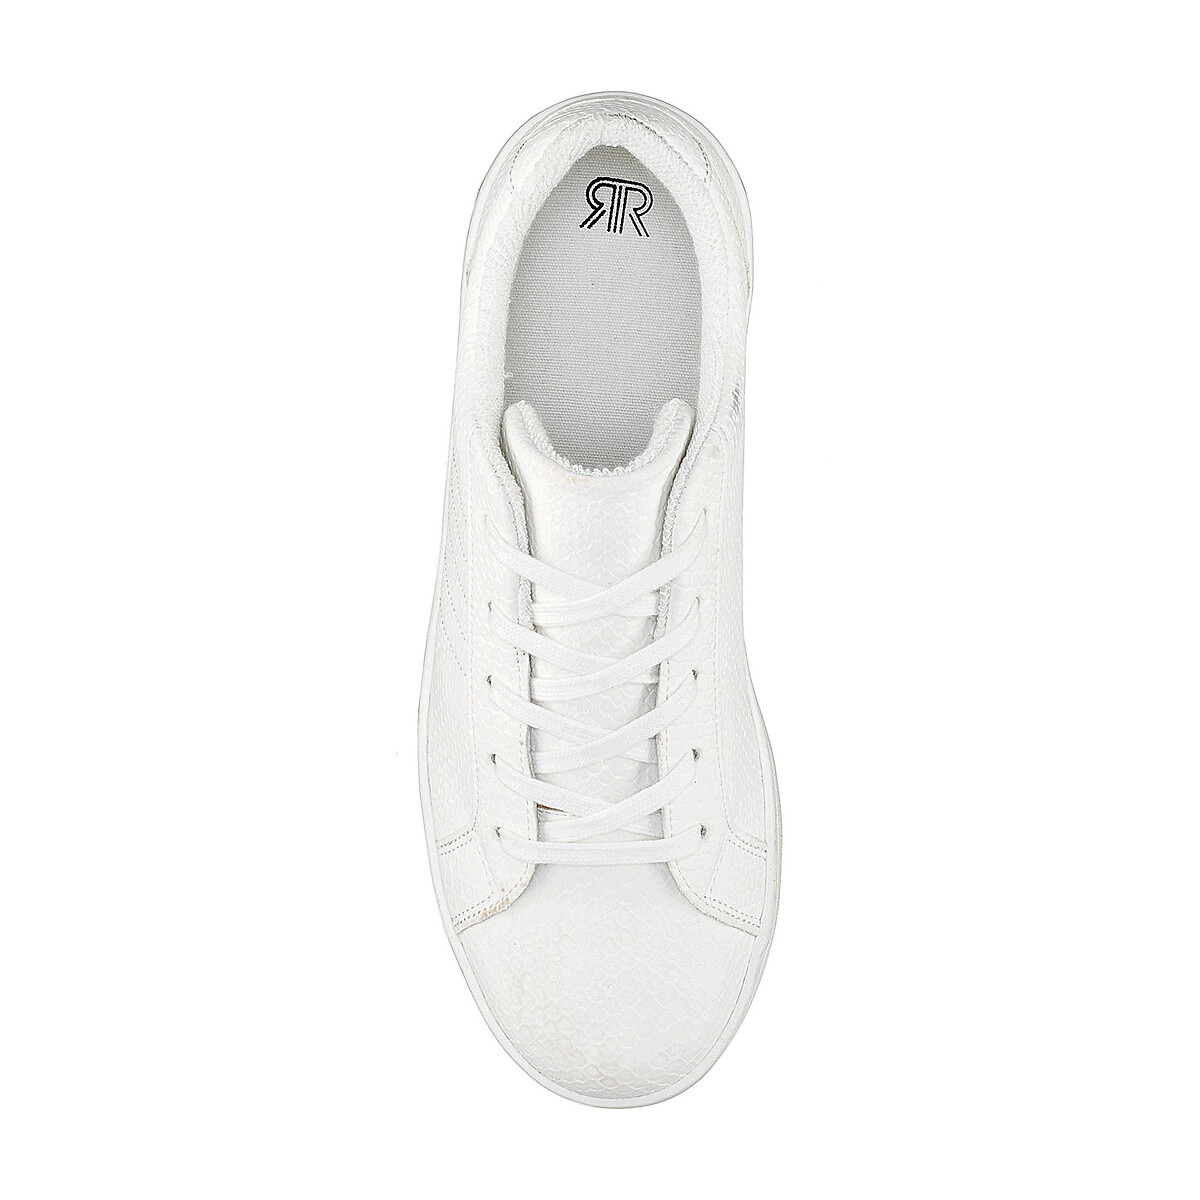 Кроссовки La Redoute На шнуровке 37 белый, размер 37 - фото 4